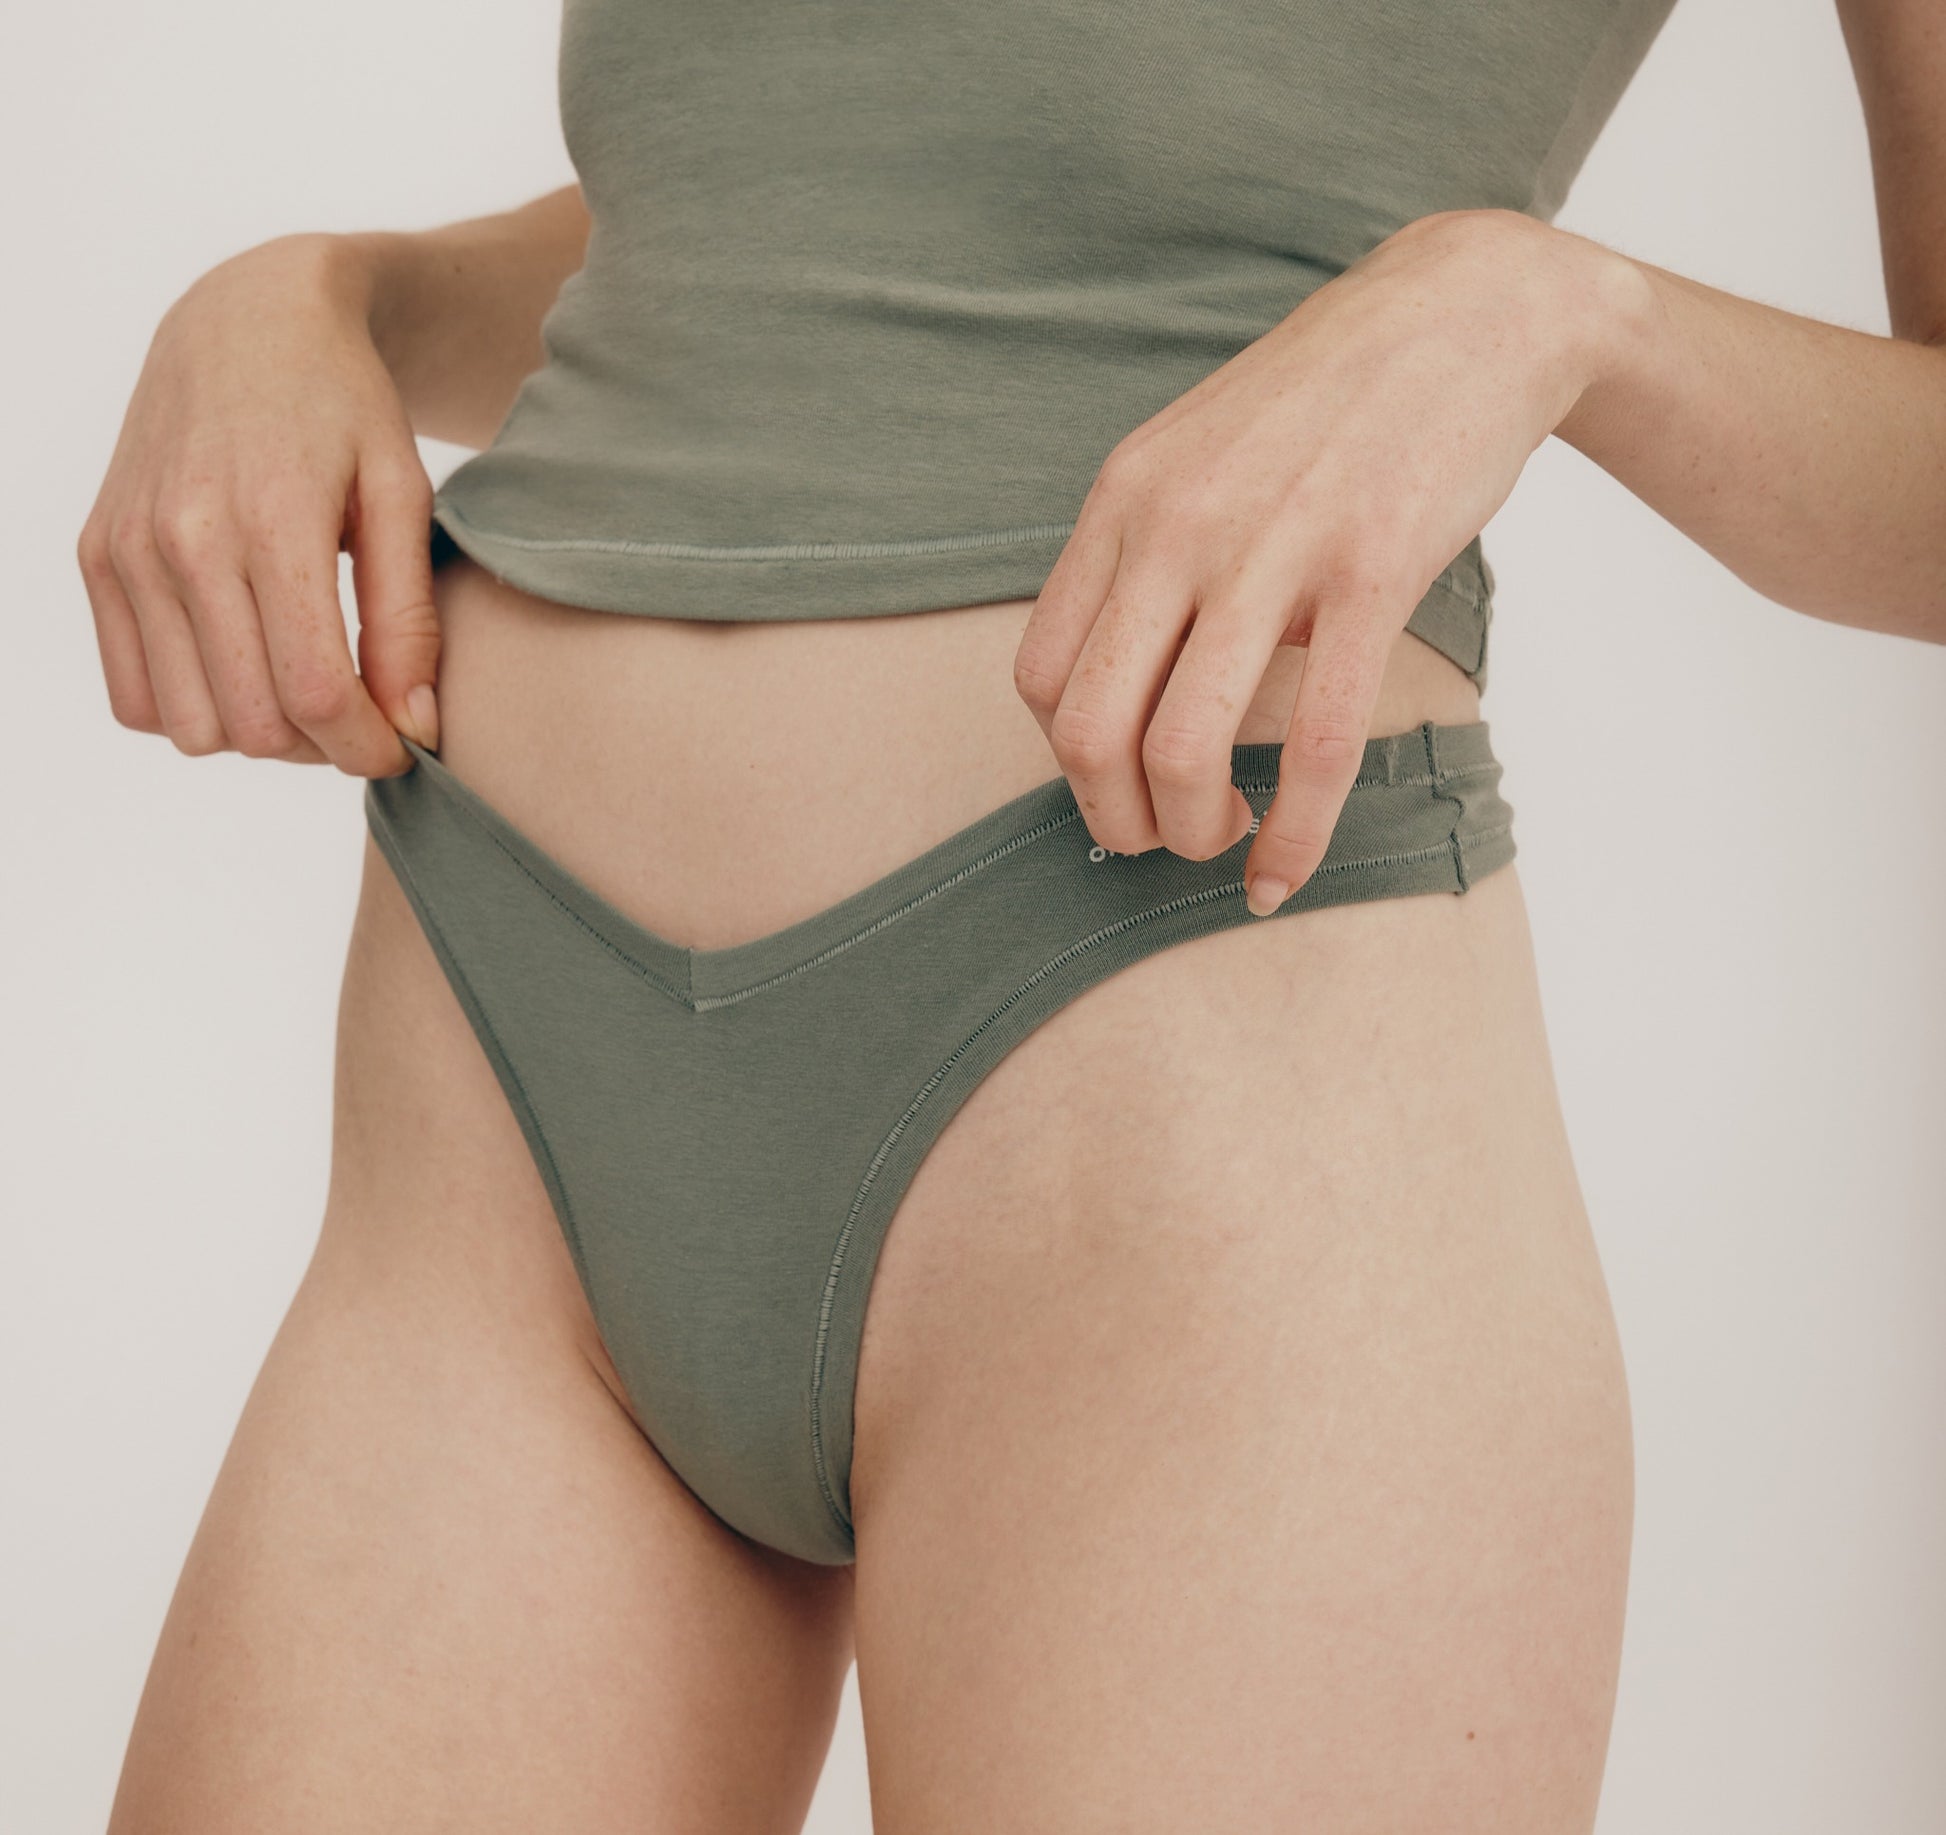 TENCEL™ Modal Thongs, Sustainable Thongs